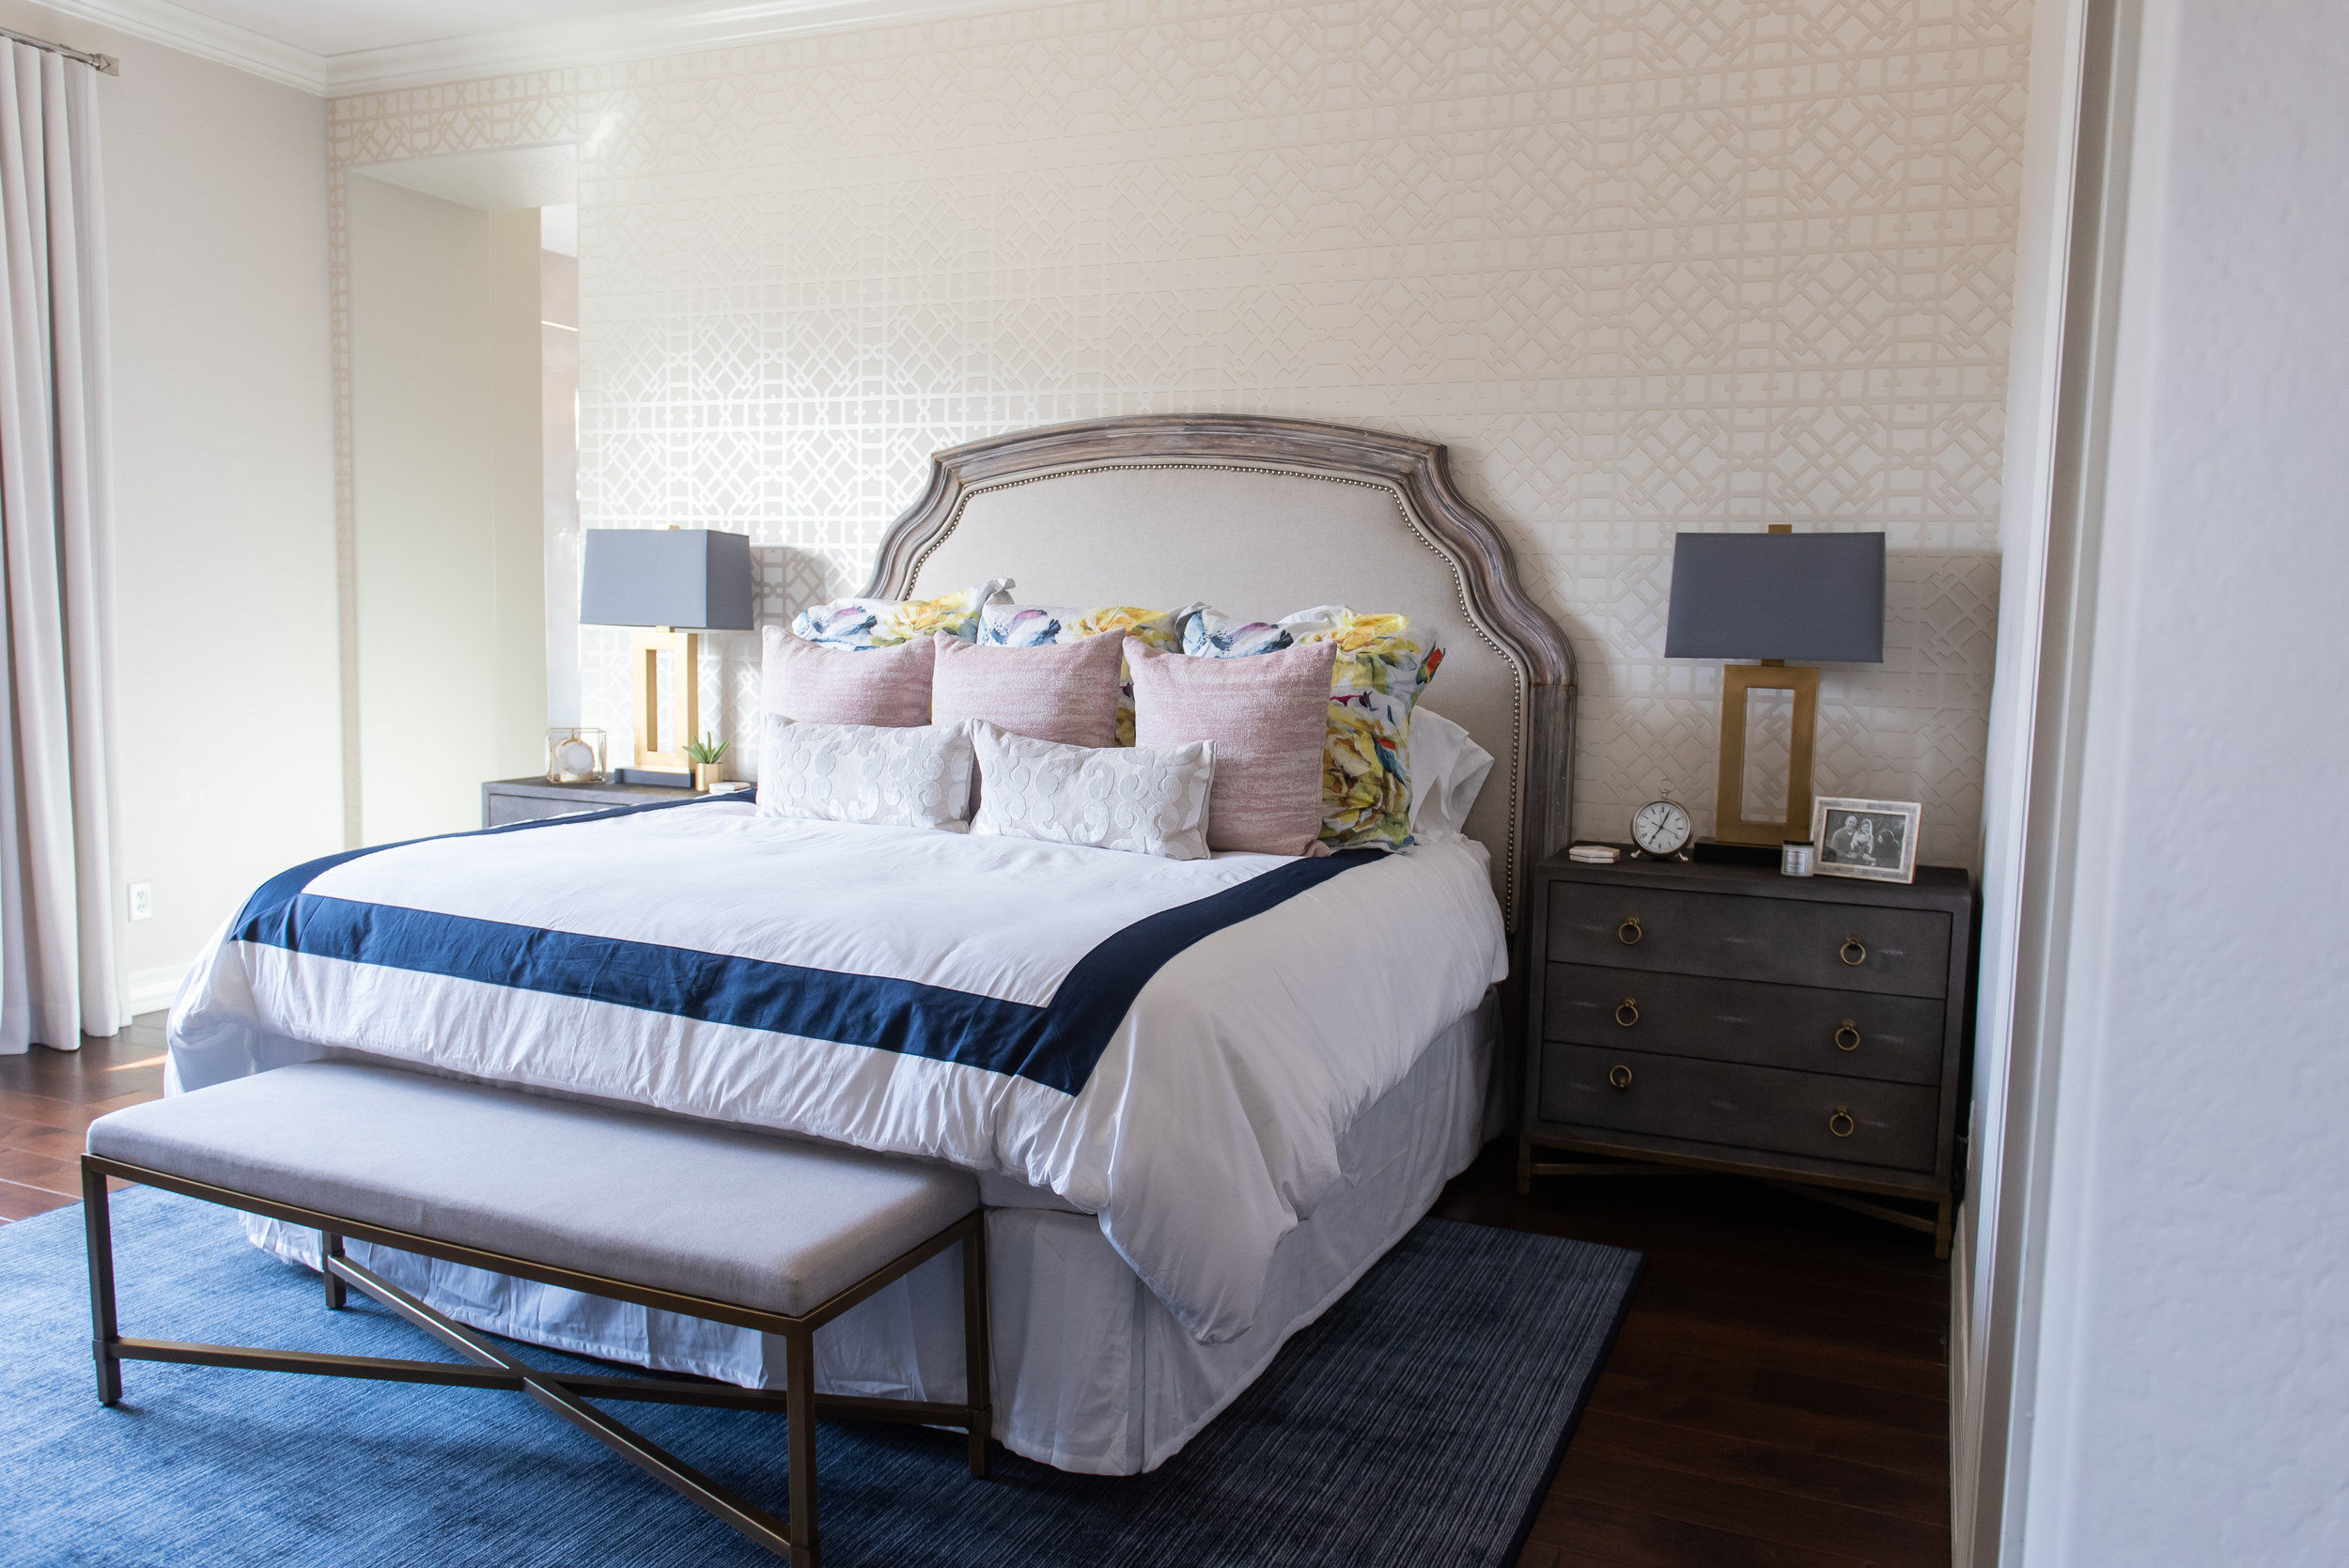 Master bedroom +lamp +nightstand +throw pillows +bedding +wallpaper +headboard +bench +rug.jpg